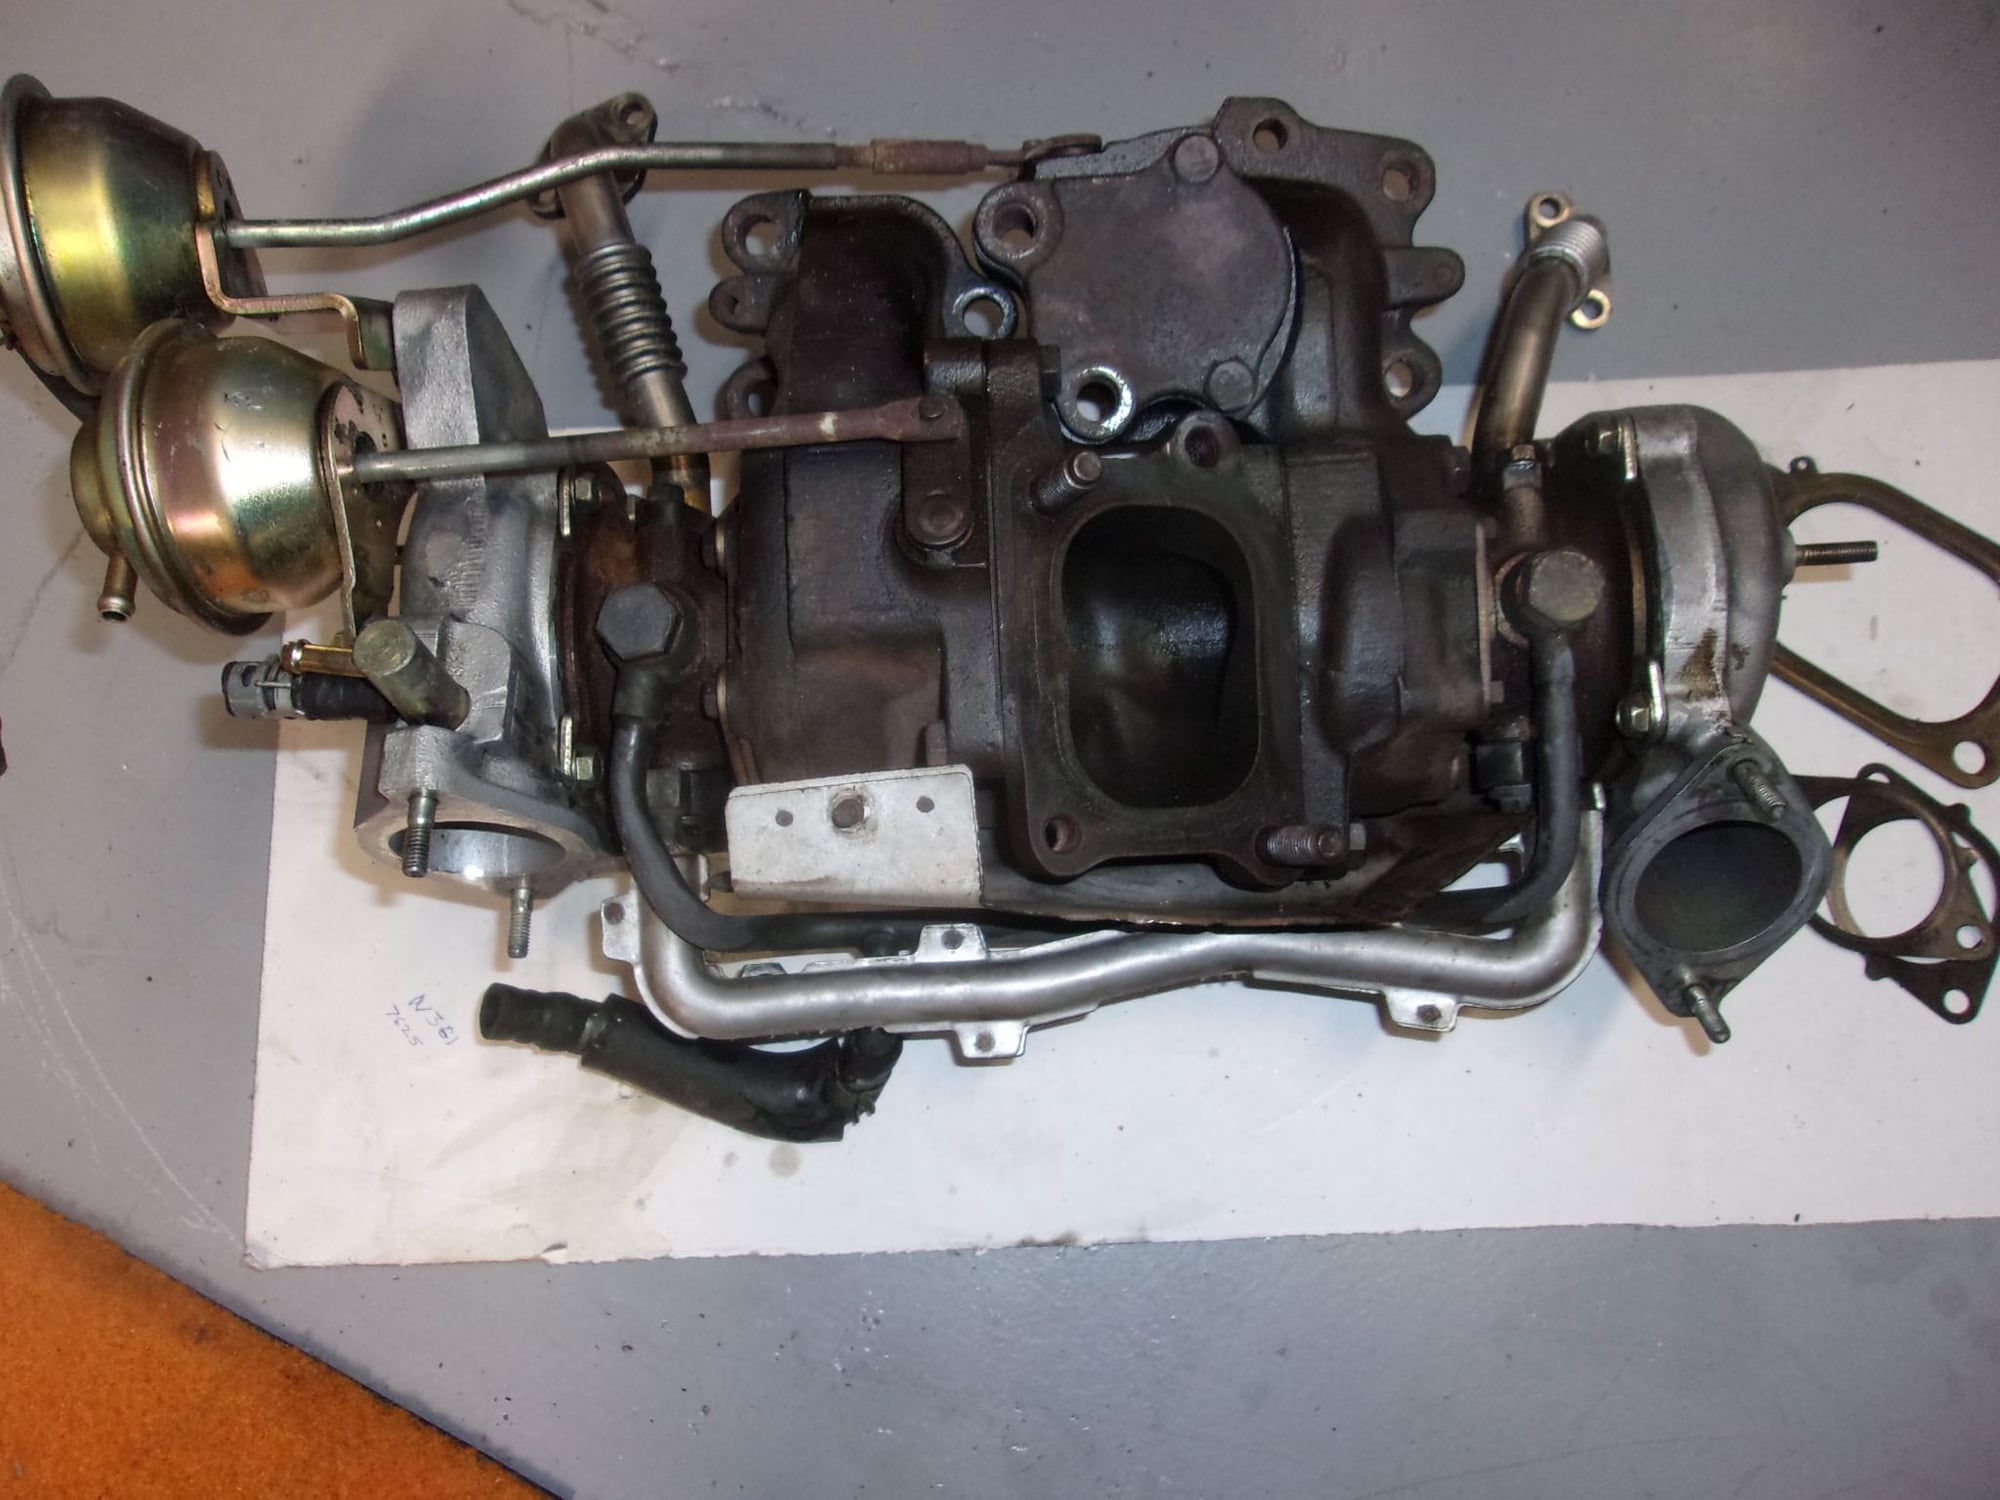 Engine - Power Adders - '95 N3G1 Twins - Used - 1995 Mazda RX-7 - Murfreesboro, TN 37130, United States